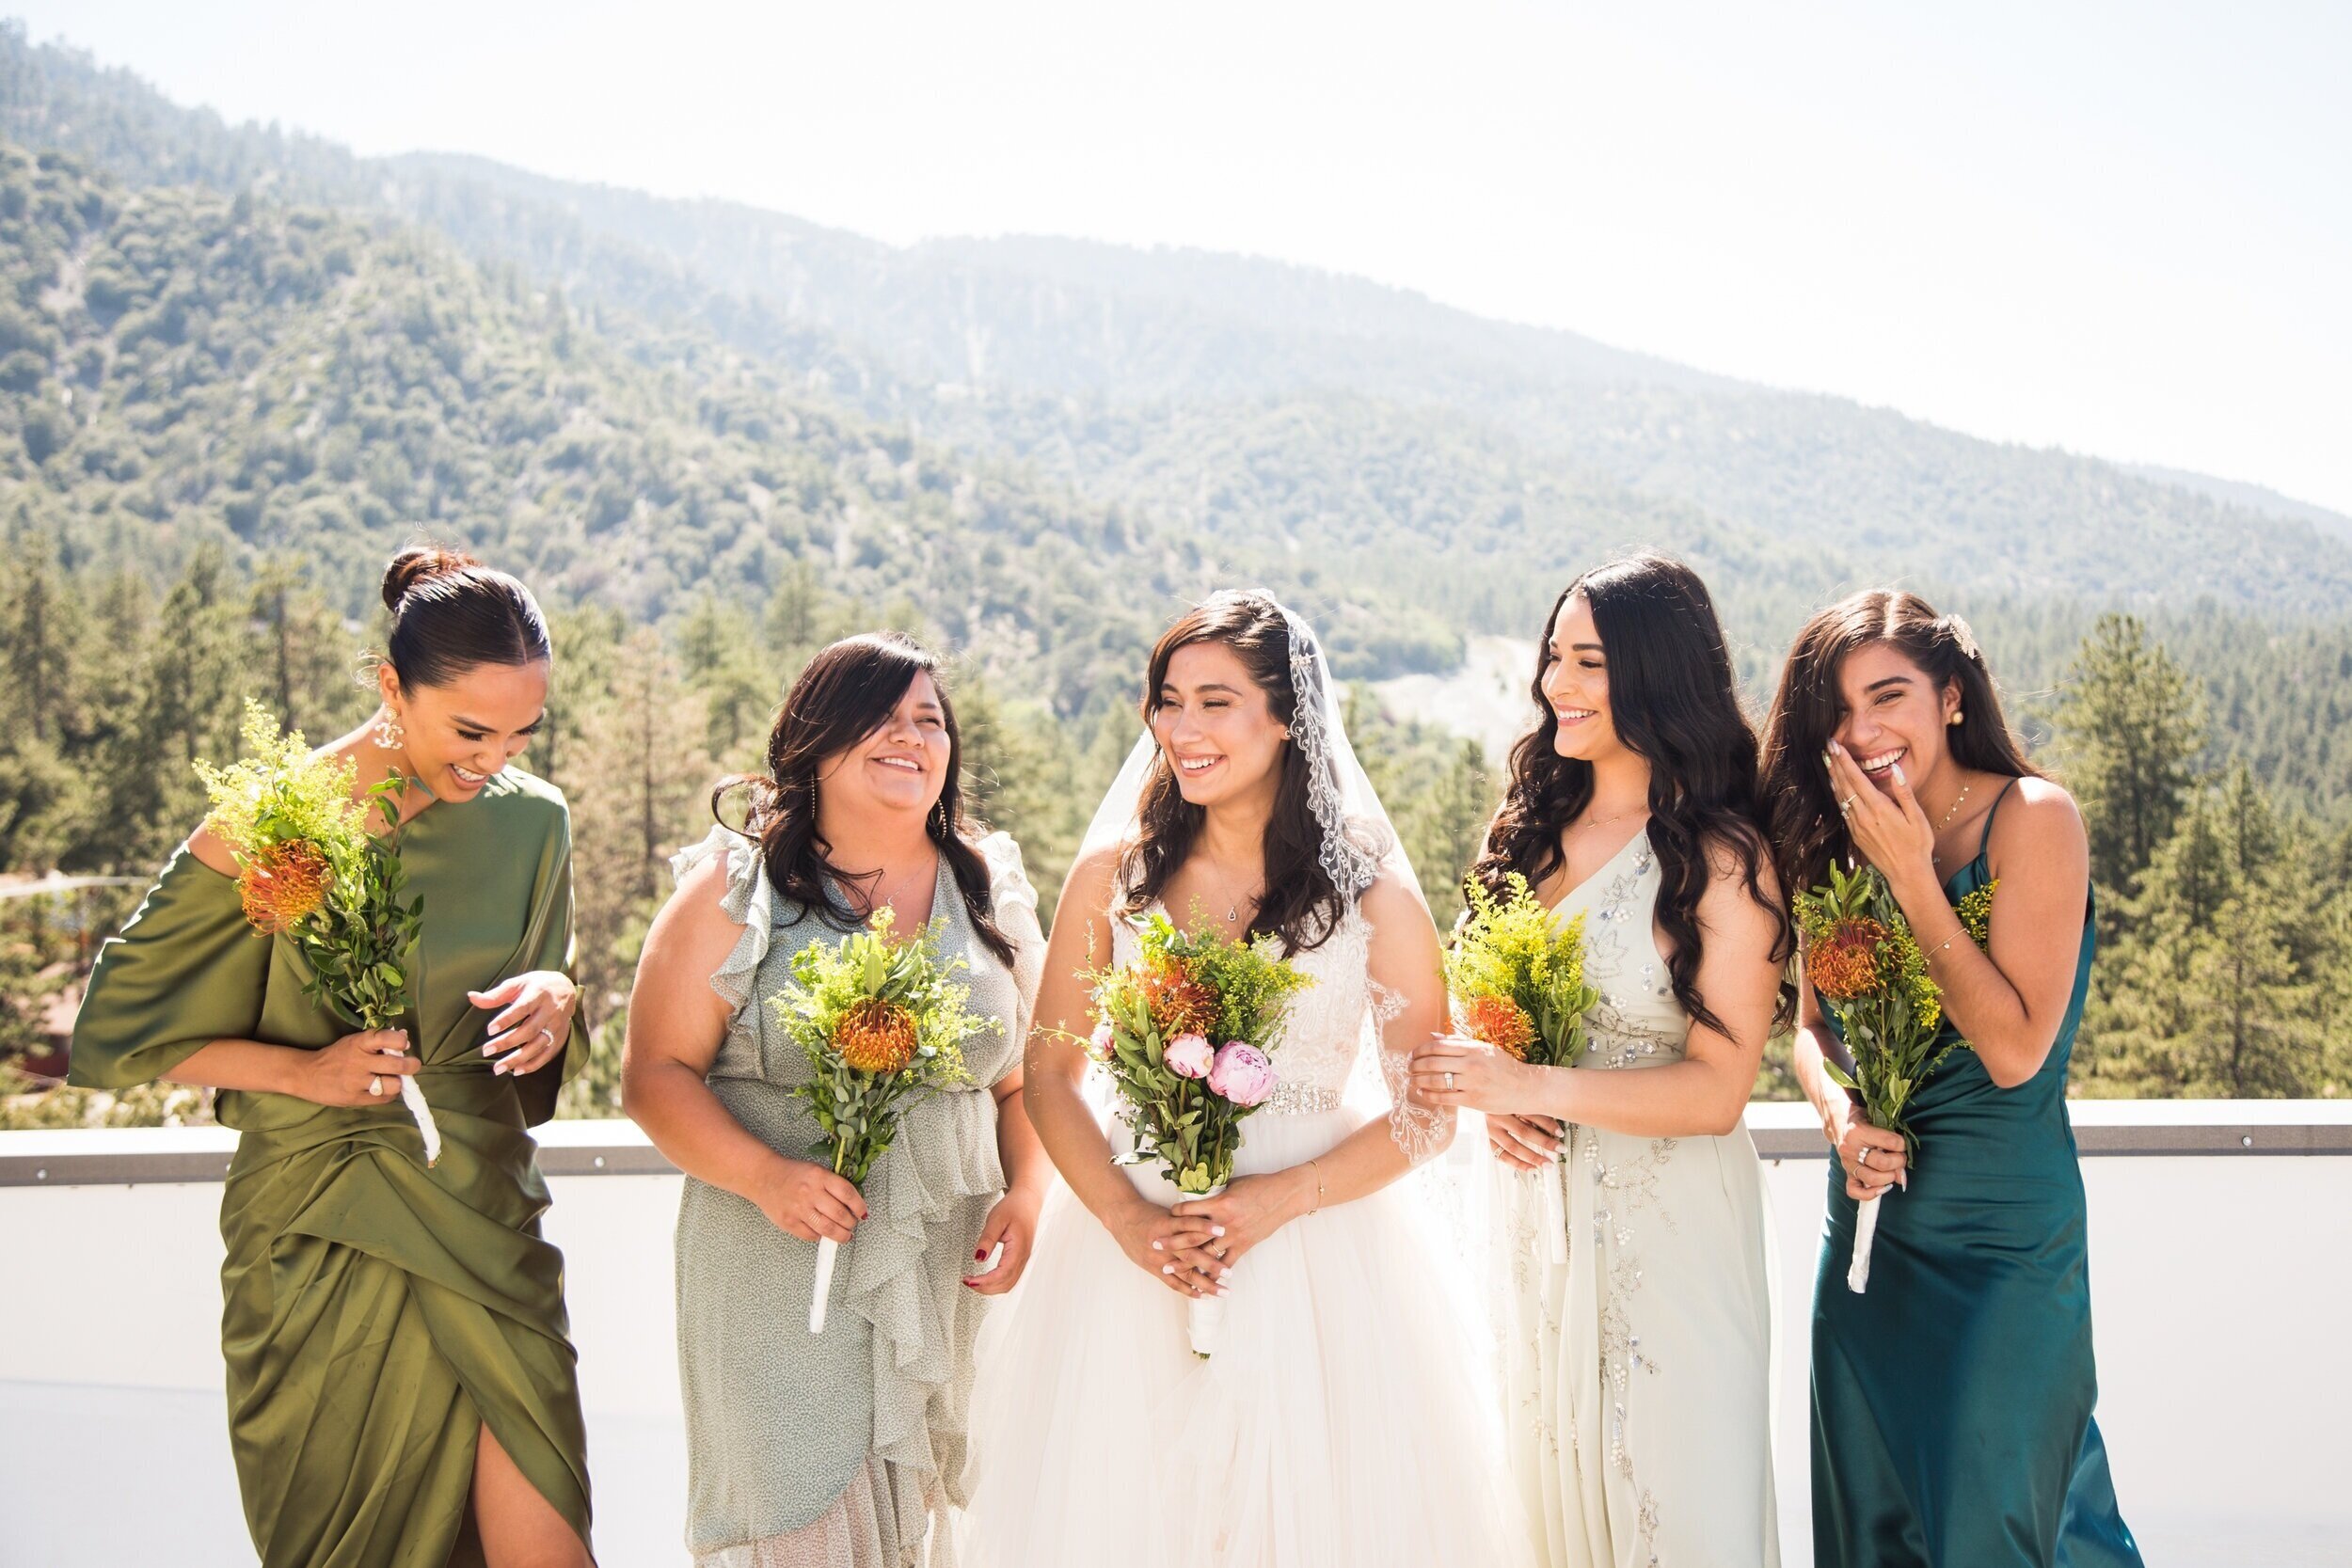 Green mismatched bridesmaids dresses